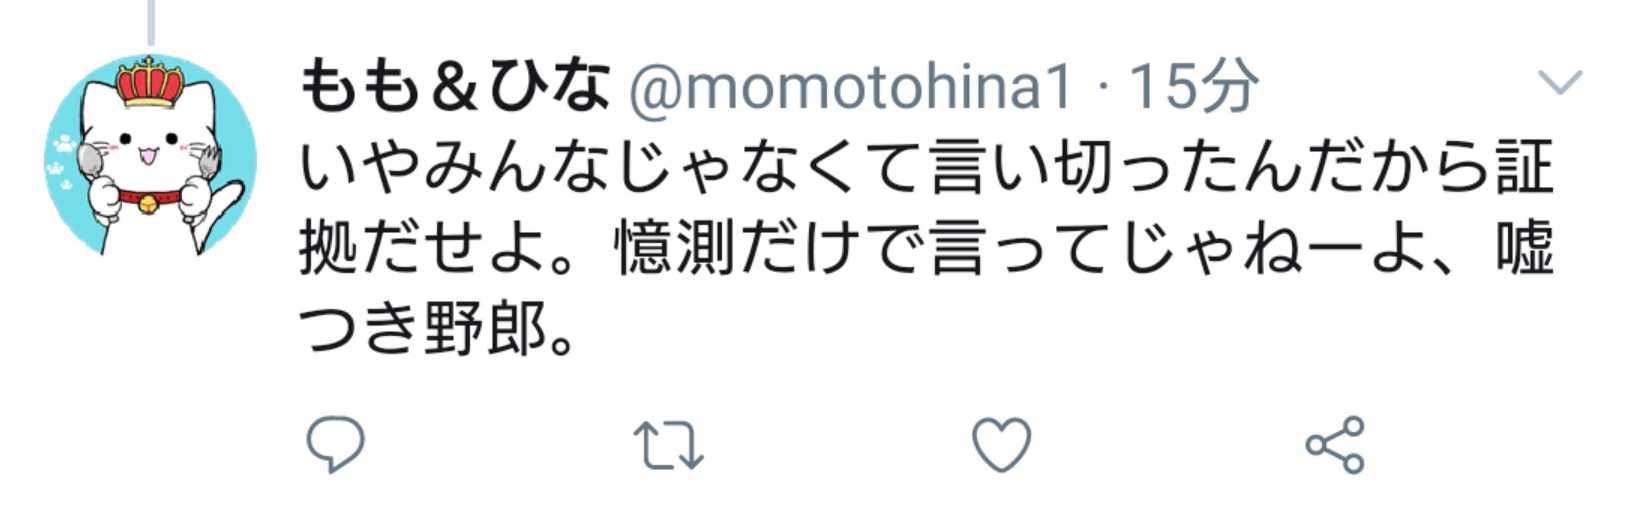 momohina_twitter_5.png